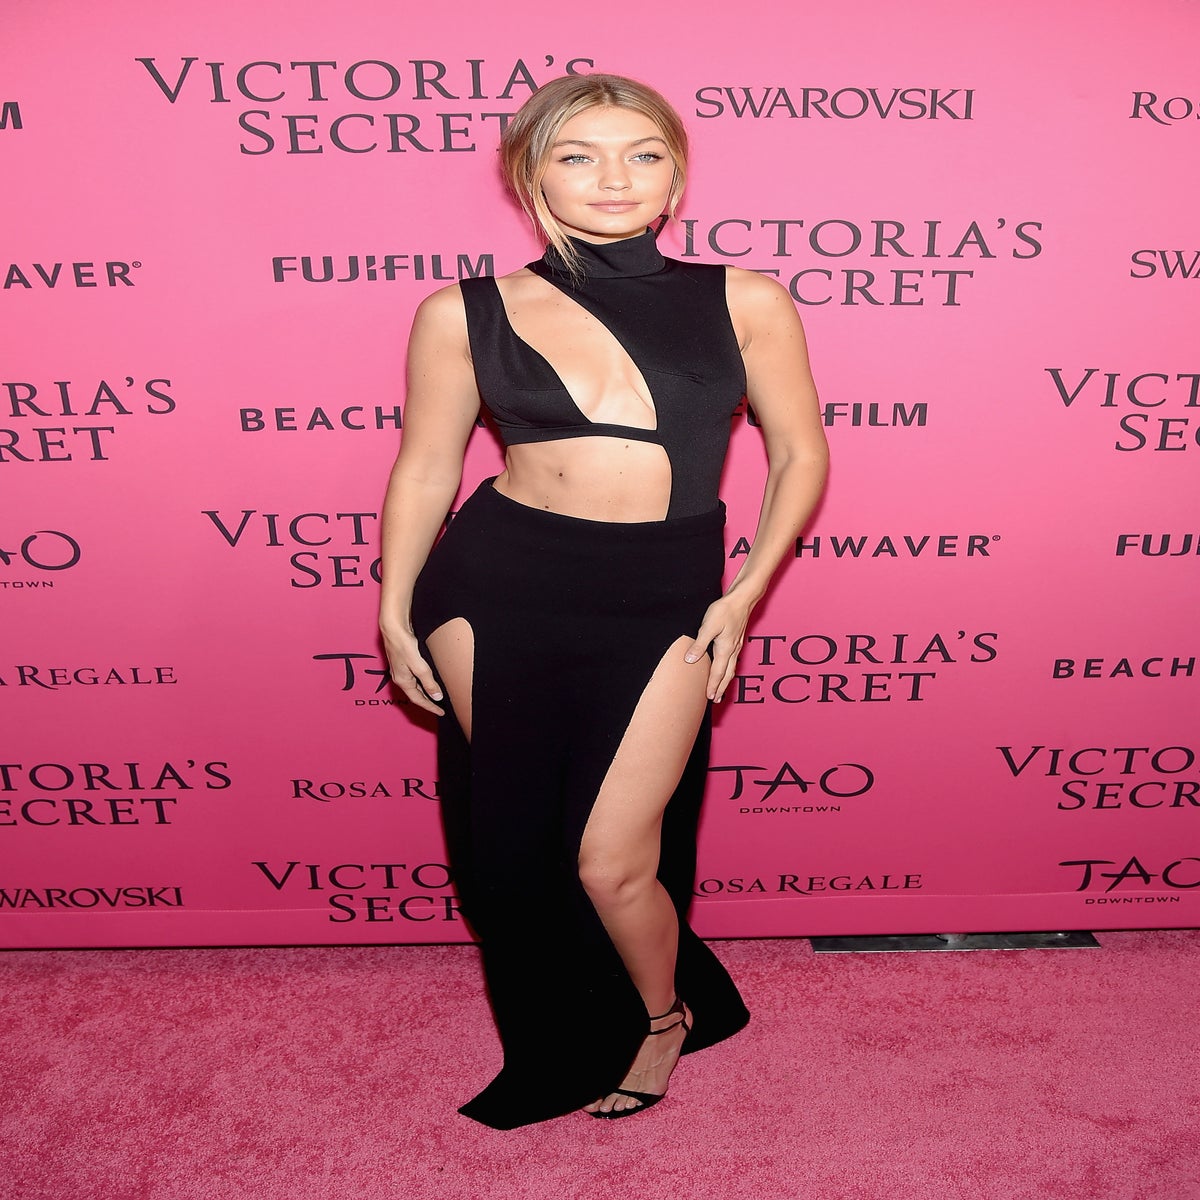 Victoria's Secret Show 2015: Lily Aldridge to model $2 million